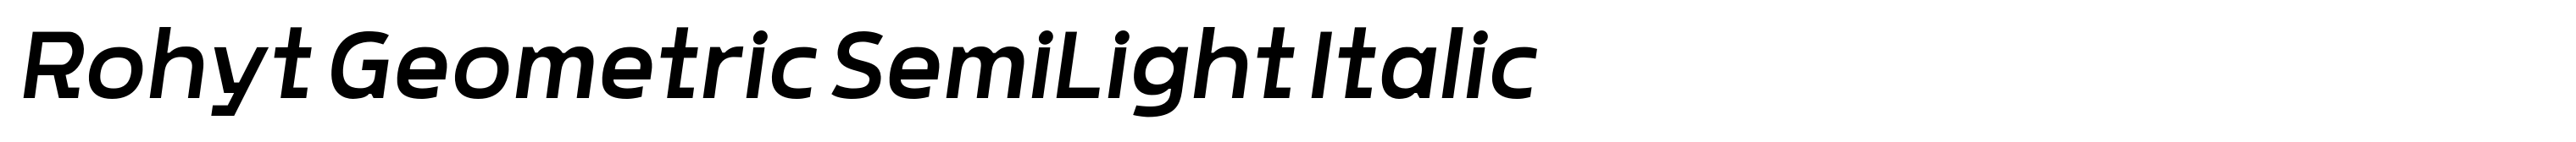 Rohyt Geometric SemiLight Italic